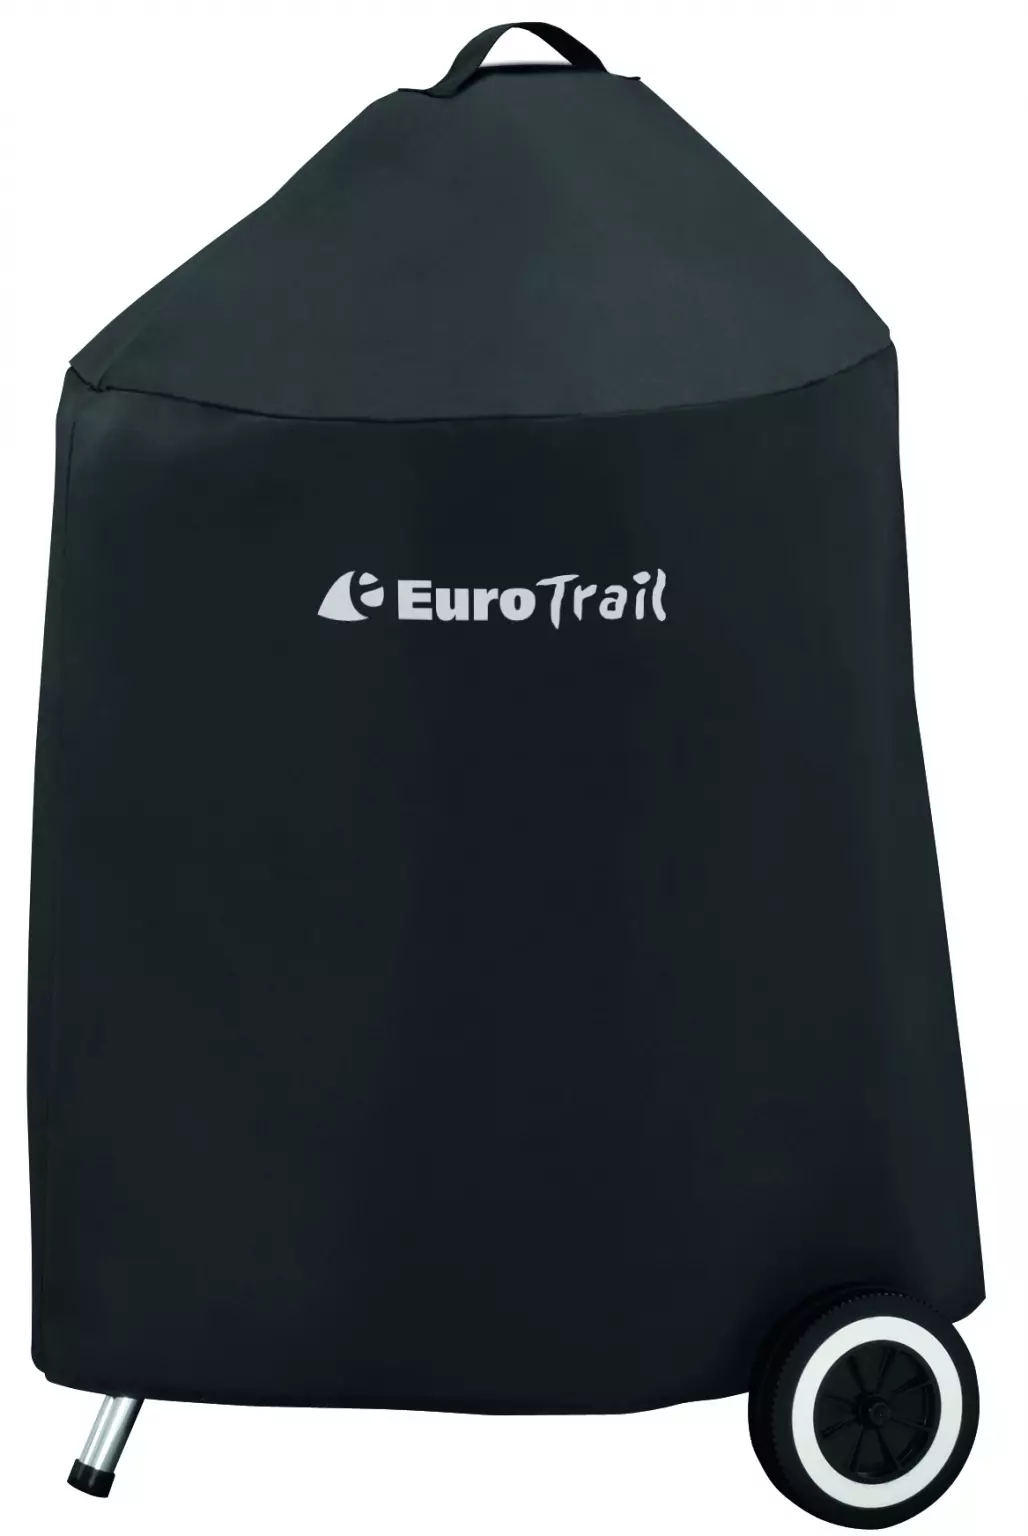 Eurotrail hoezen Eurotrail Grill cover 70cm